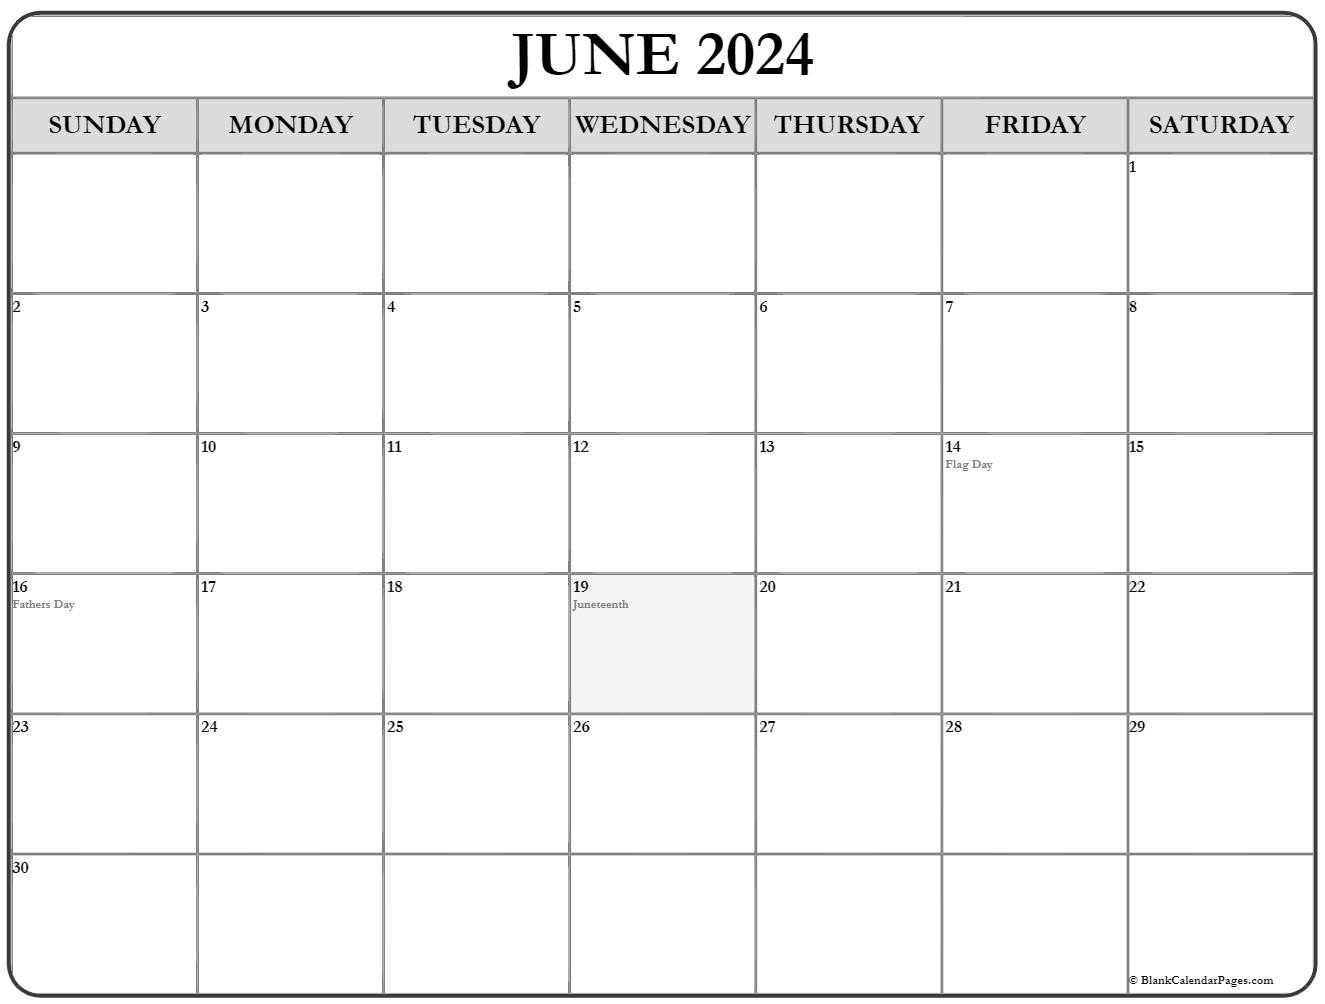 June 2023 With Holidays Calendar